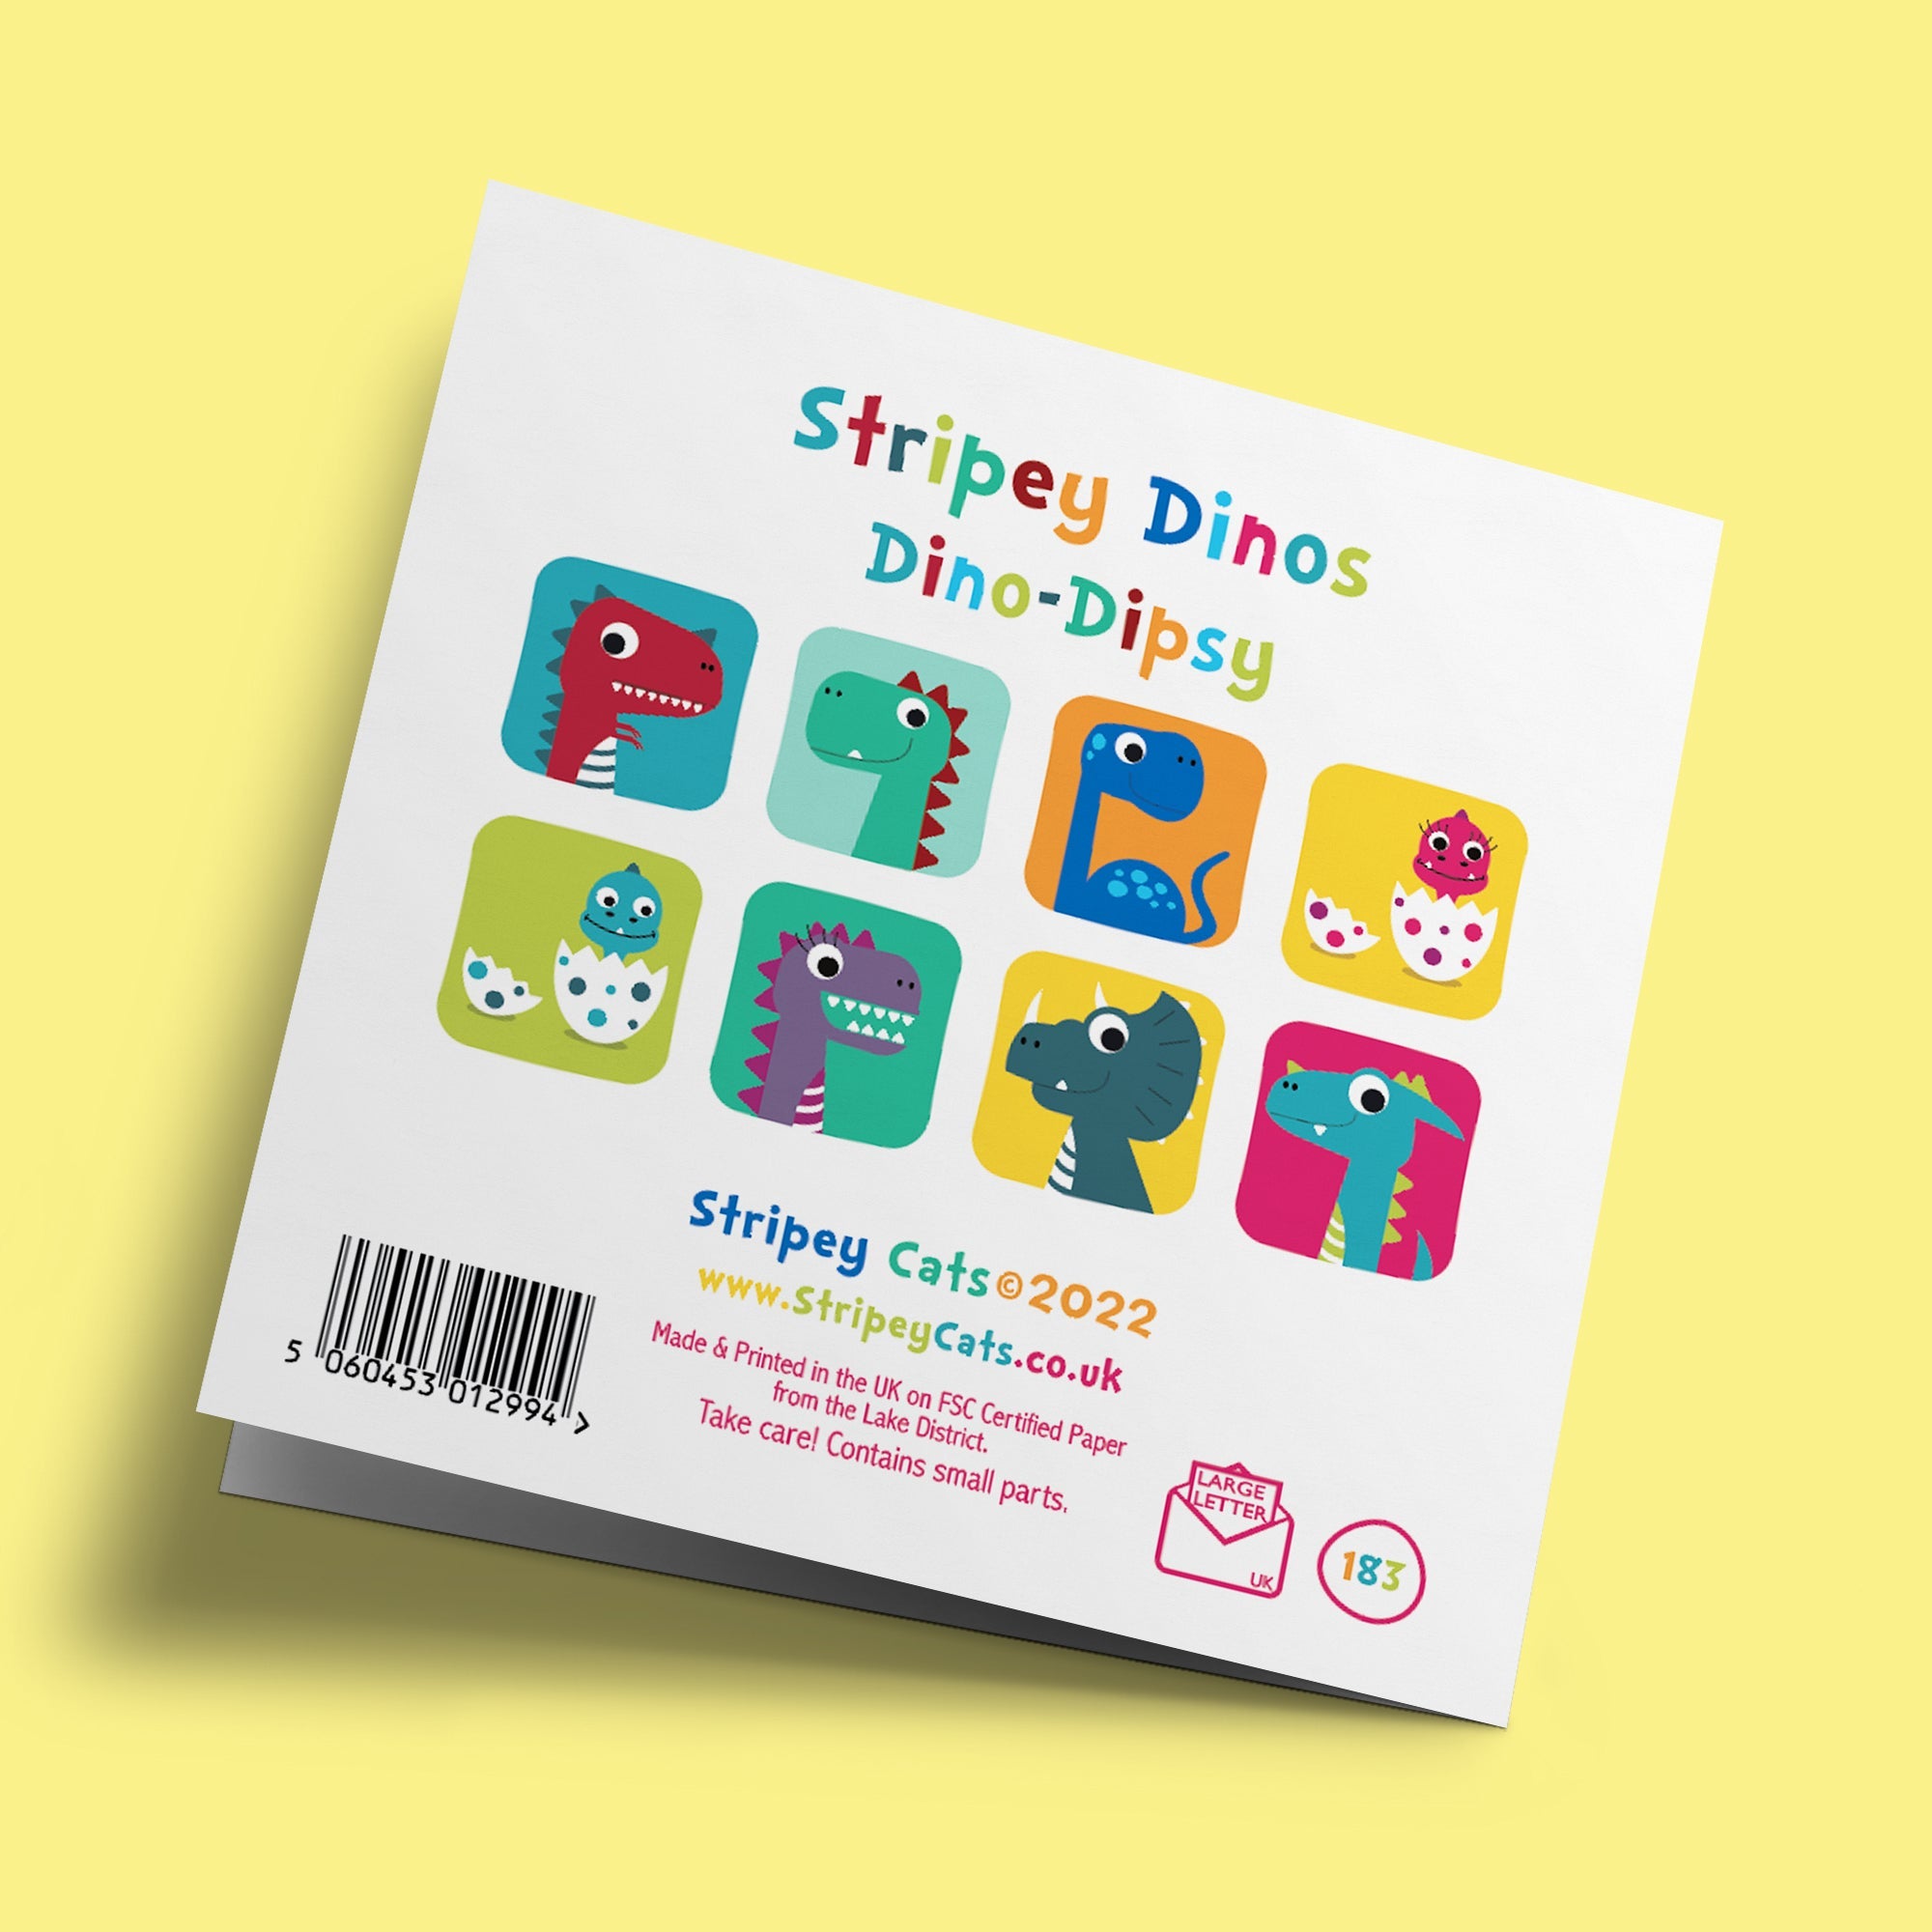 Stripey Cats - Dipsy Dino